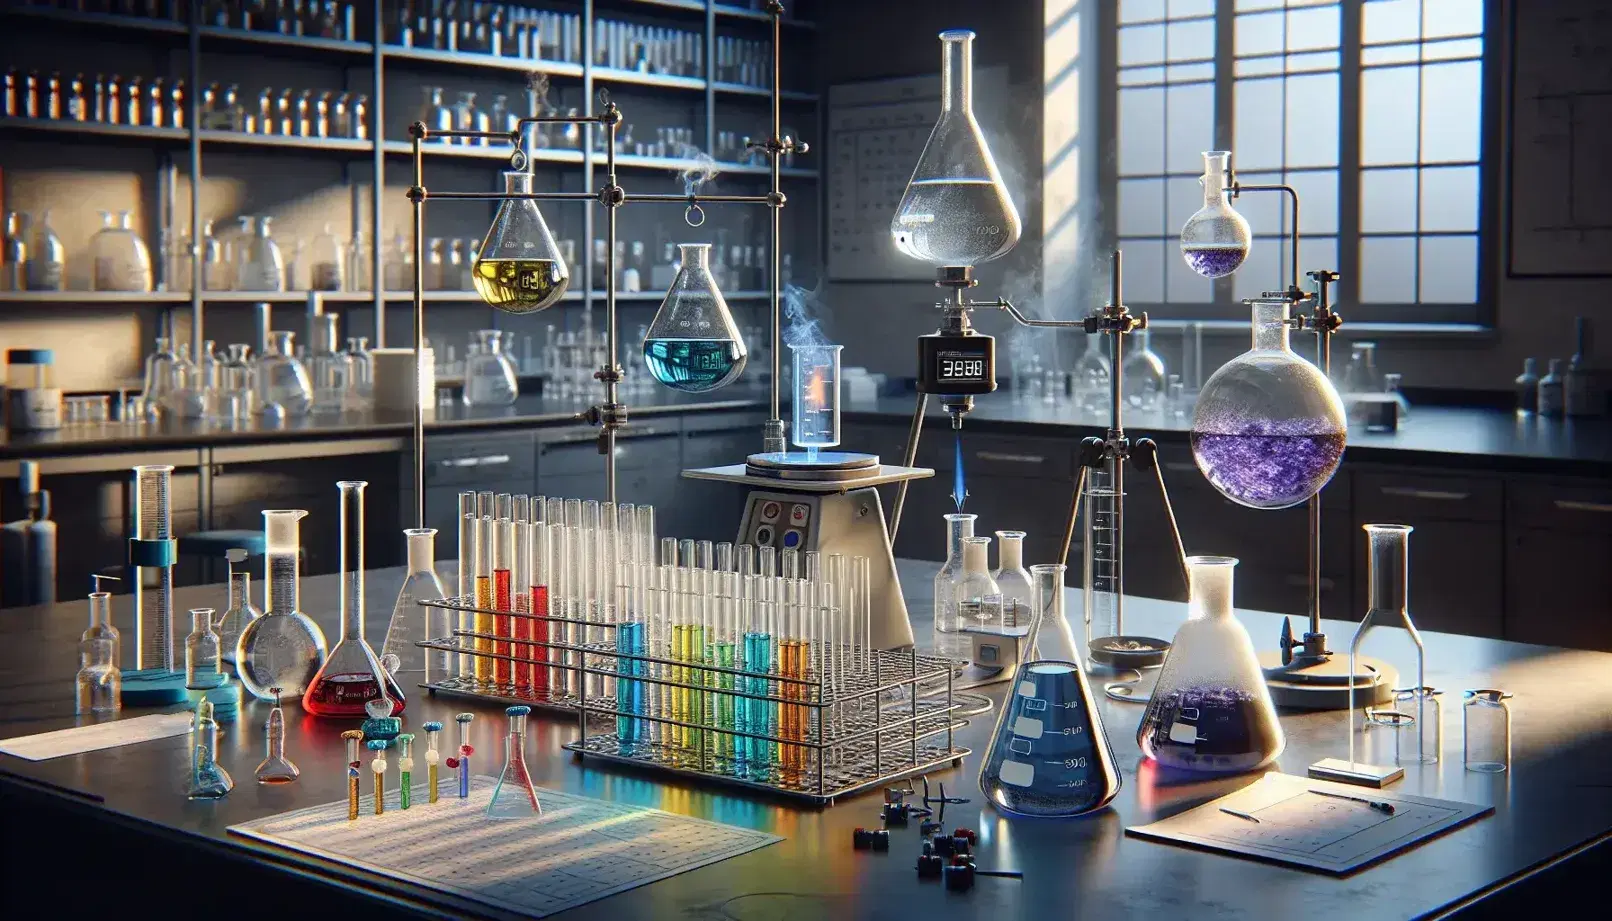 Laboratorio de química con tubos de ensayo de colores, matraz Erlenmeyer, mechero Bunsen y balanza analítica en un entorno iluminado naturalmente.